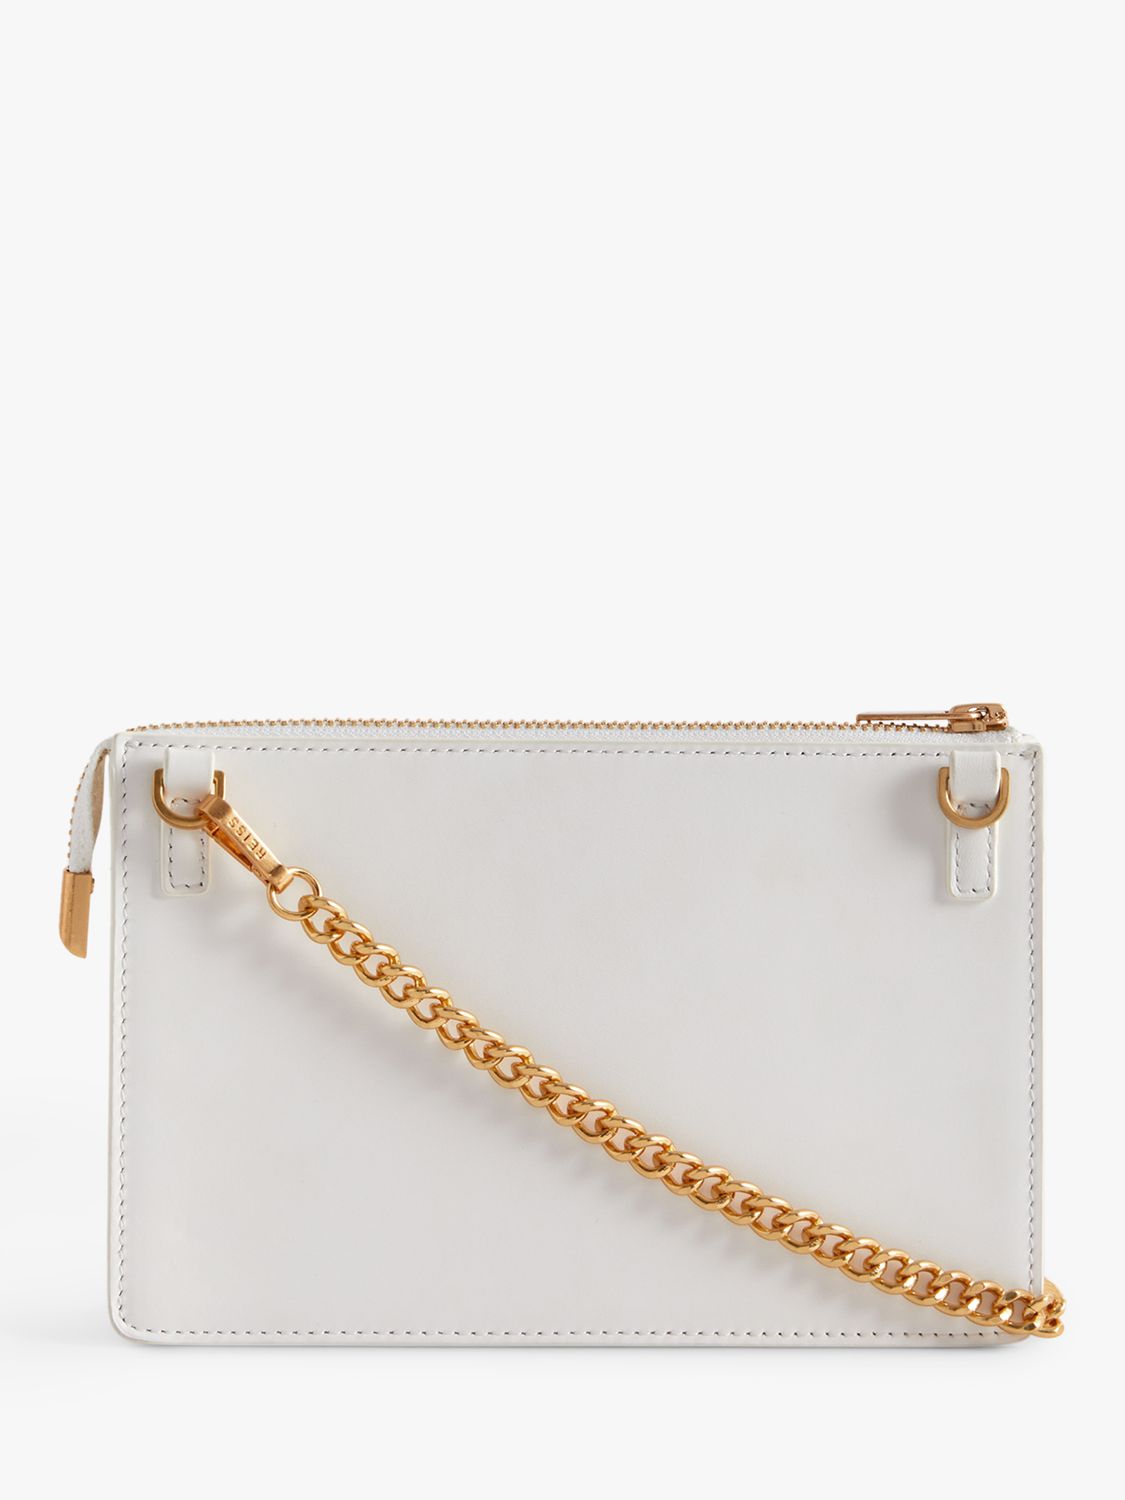 Reiss Picton Leather & Raffia Chain Strap Crossbody Bag, White/Natural, One Size